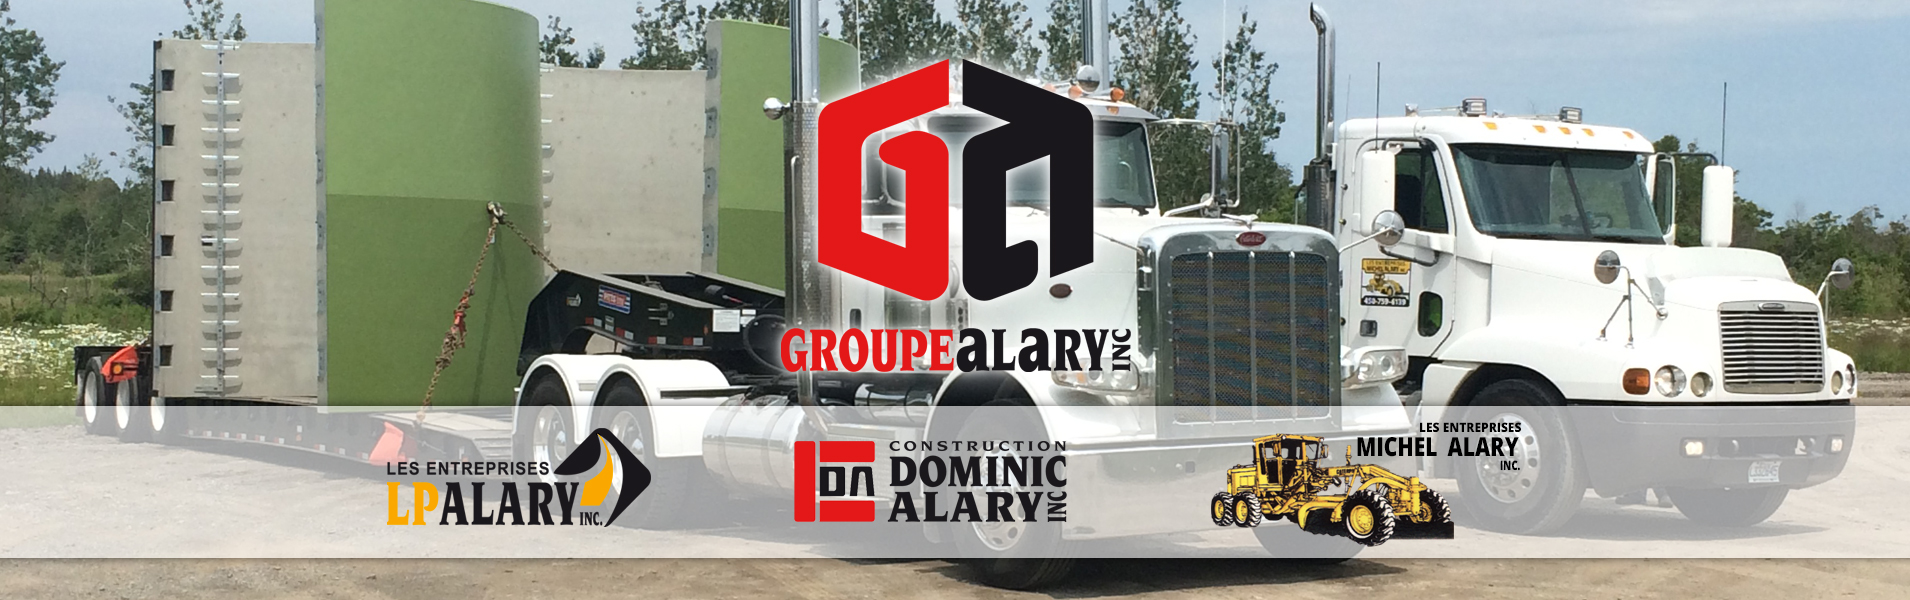 Groupe Alary | Les entreprises LP Alary, Construction Dominic Alary, Les entreprises Michel Alary